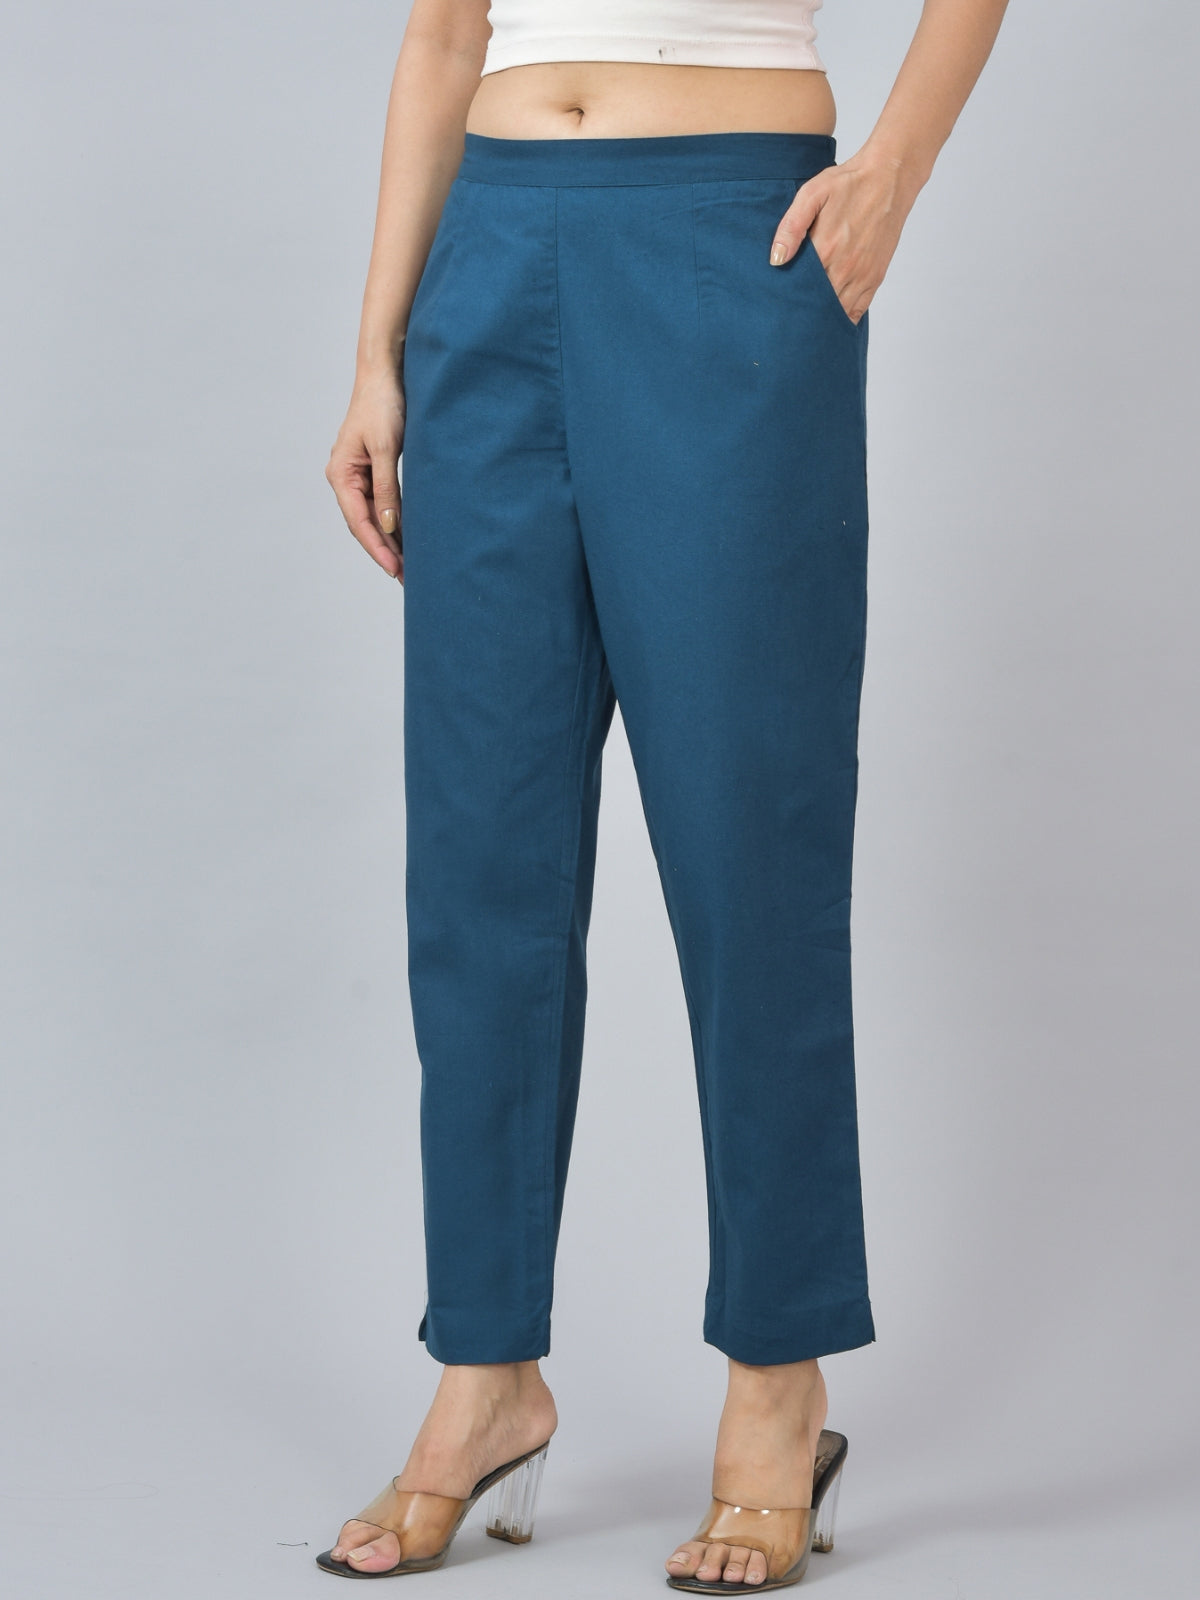 Women Regular Fit Deep Pocket Solid Teal Blue Half Elastic Cotton Pants